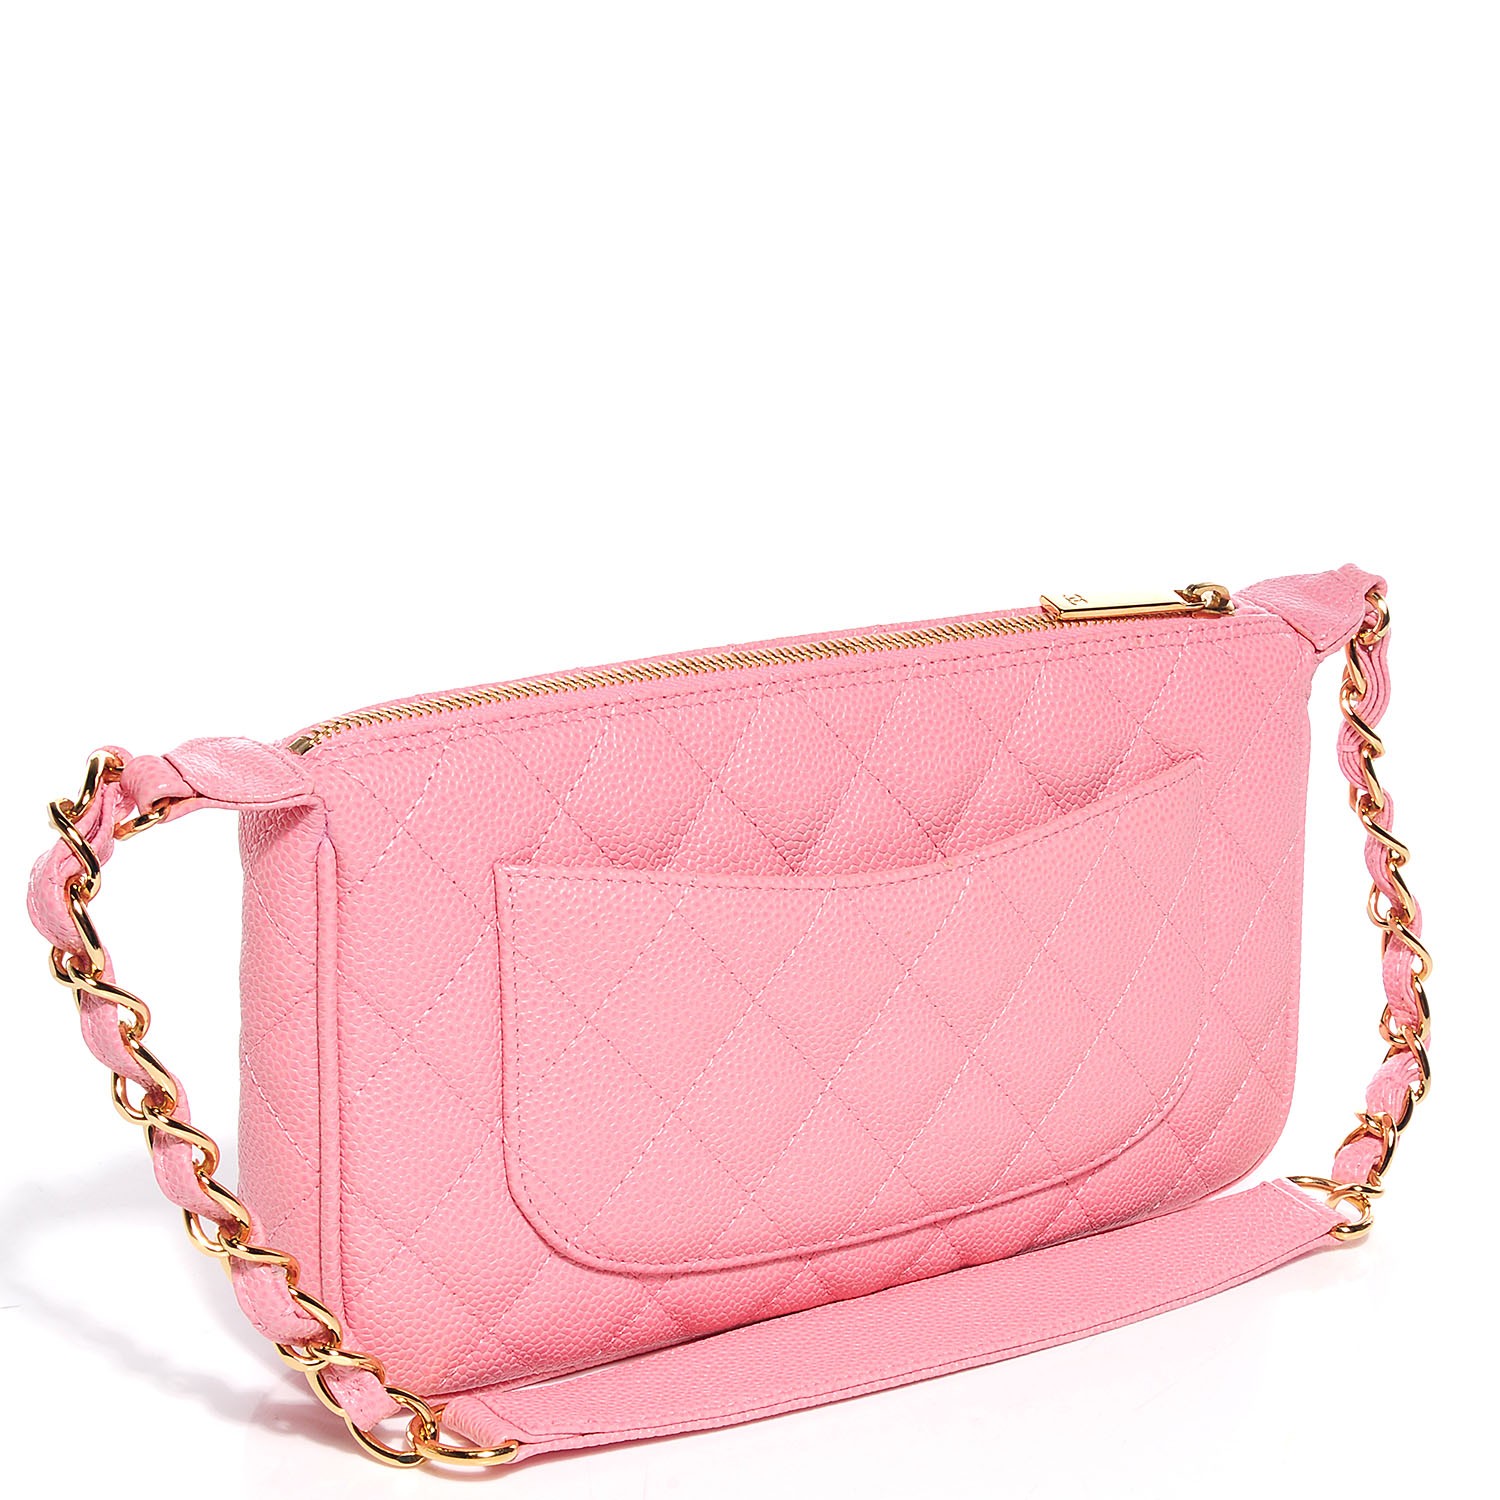 CHANEL Caviar Quilted Shoulder Bag Pink 97920